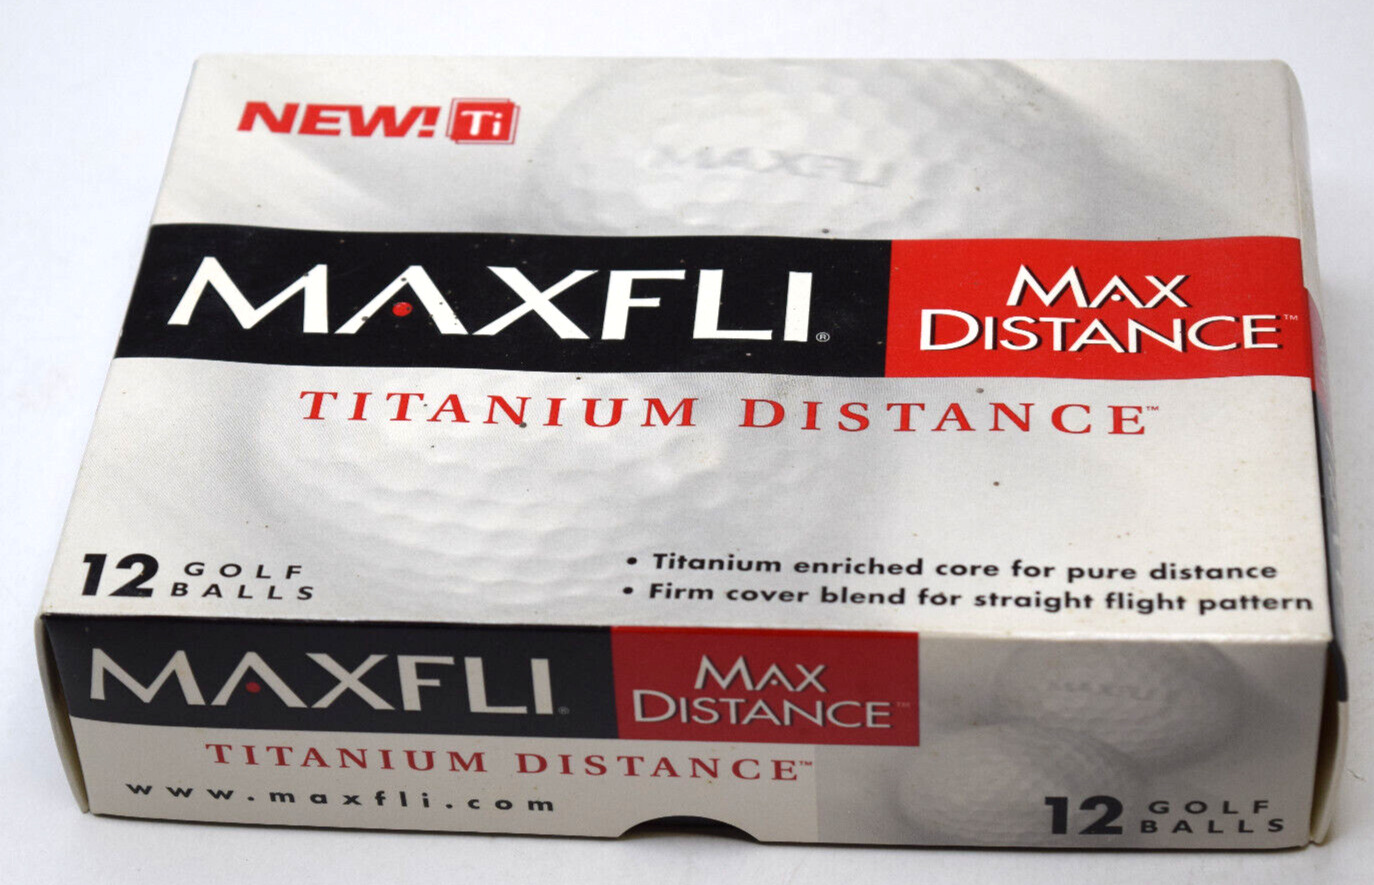 Maxfli Max Distance Titanium Distance 12 Golf Balls New in Factory Sealed Box